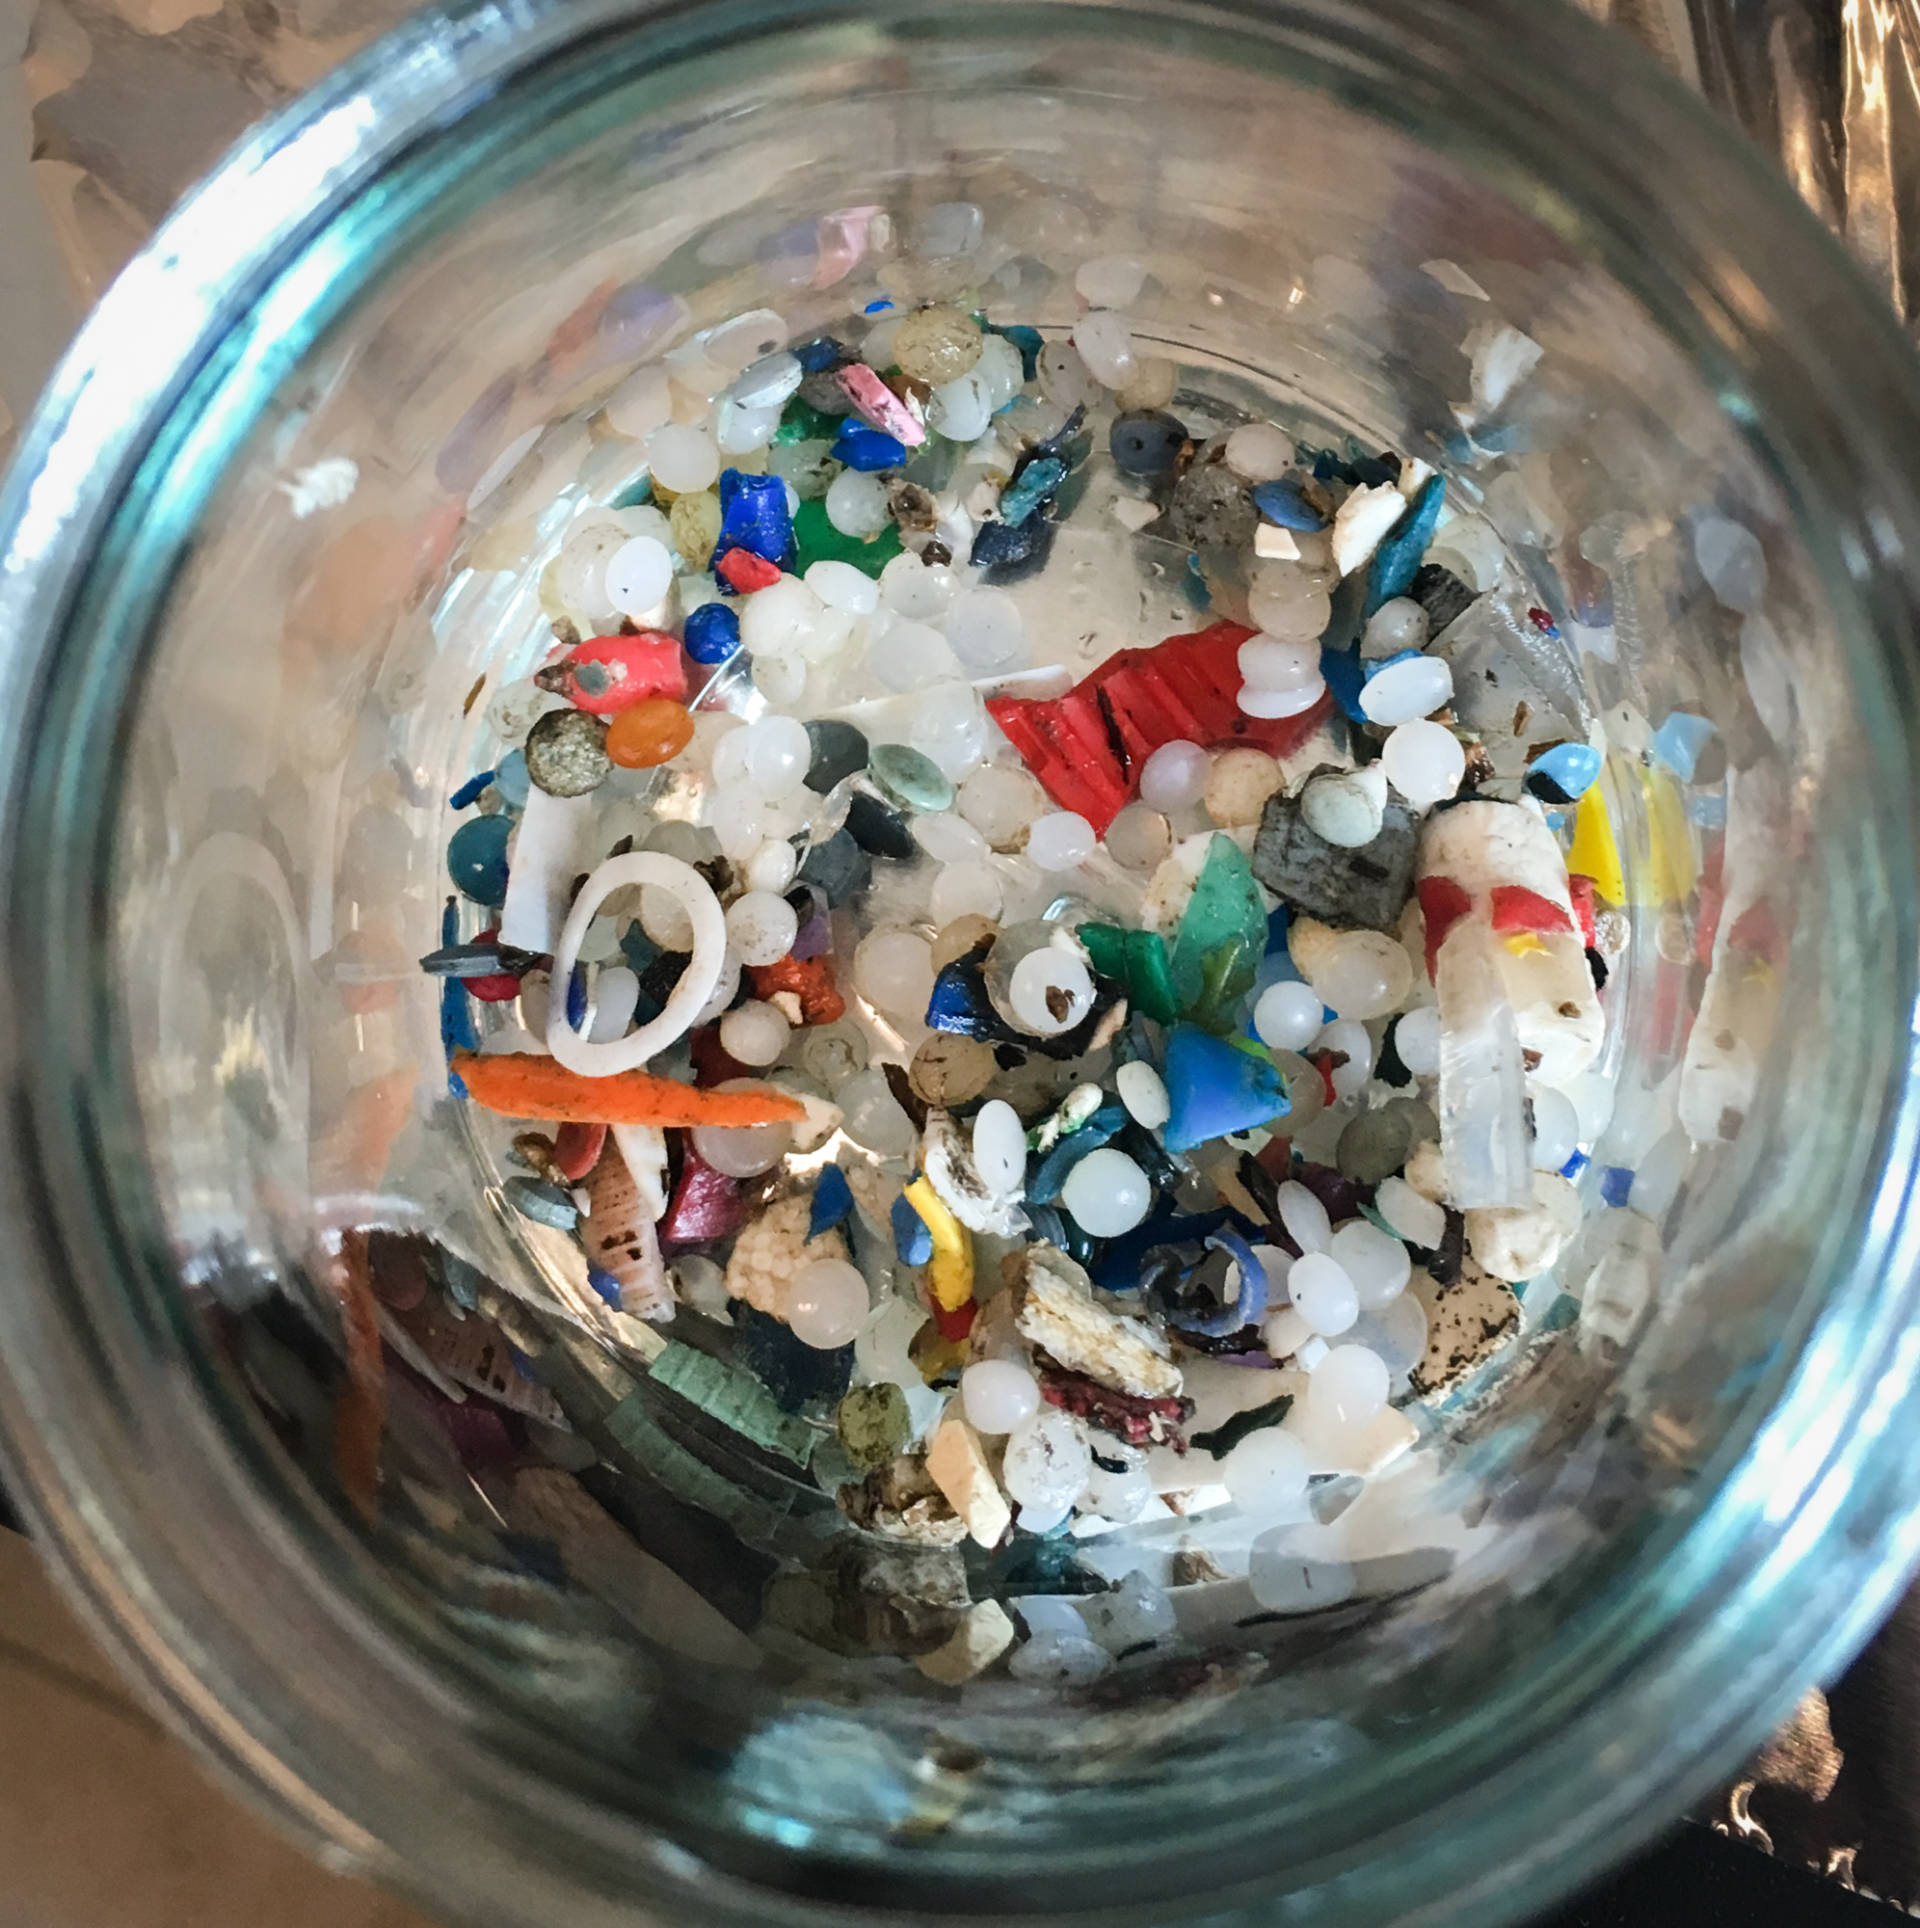 Microplastics found along Lake Ontario by Rochman's team